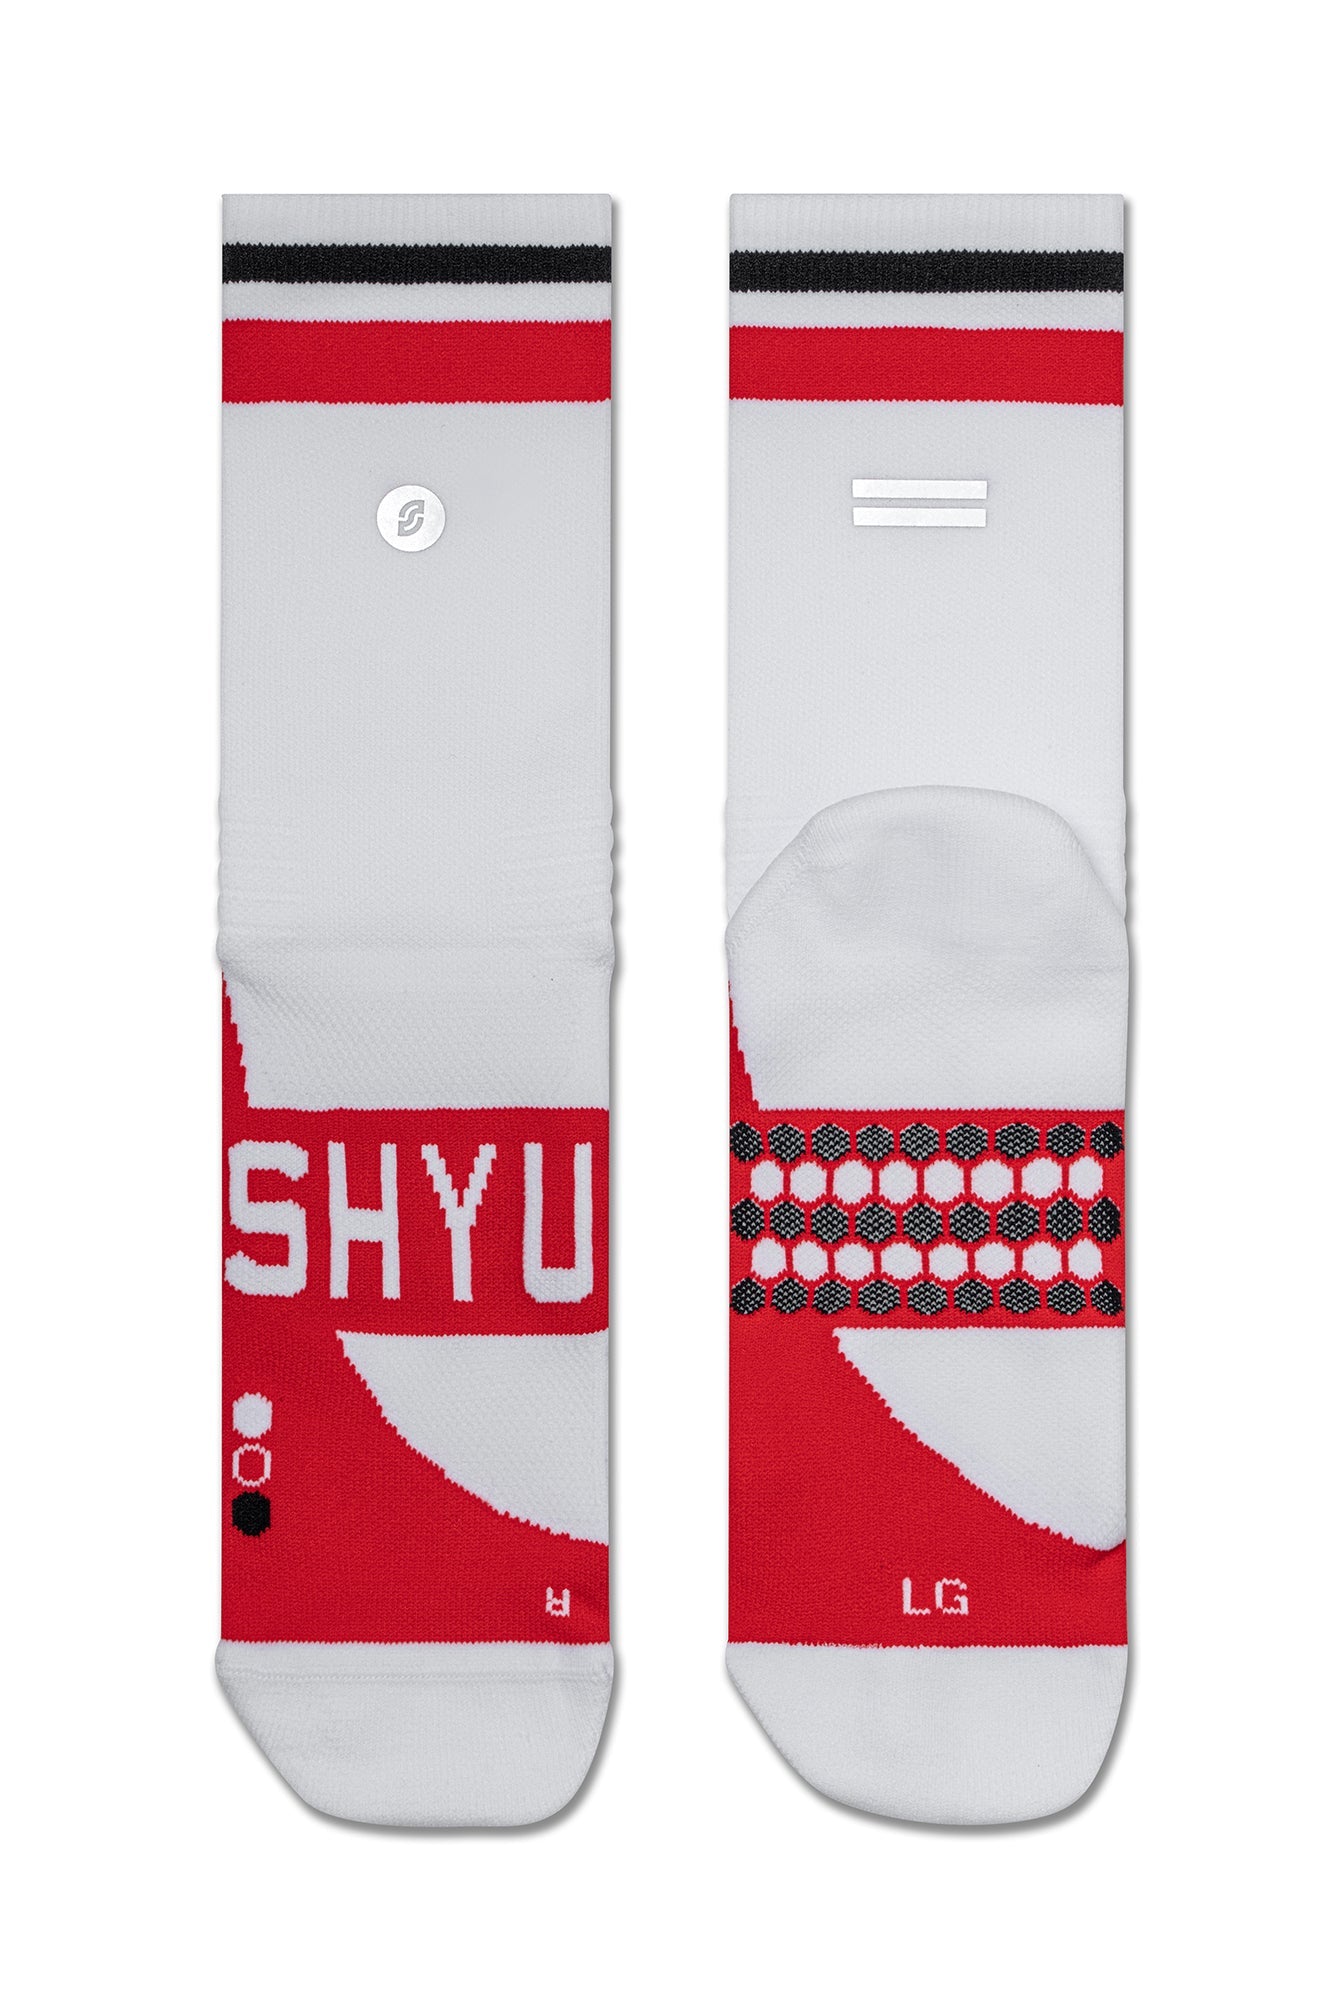 SHYU racing socks - white | red | black (small only)